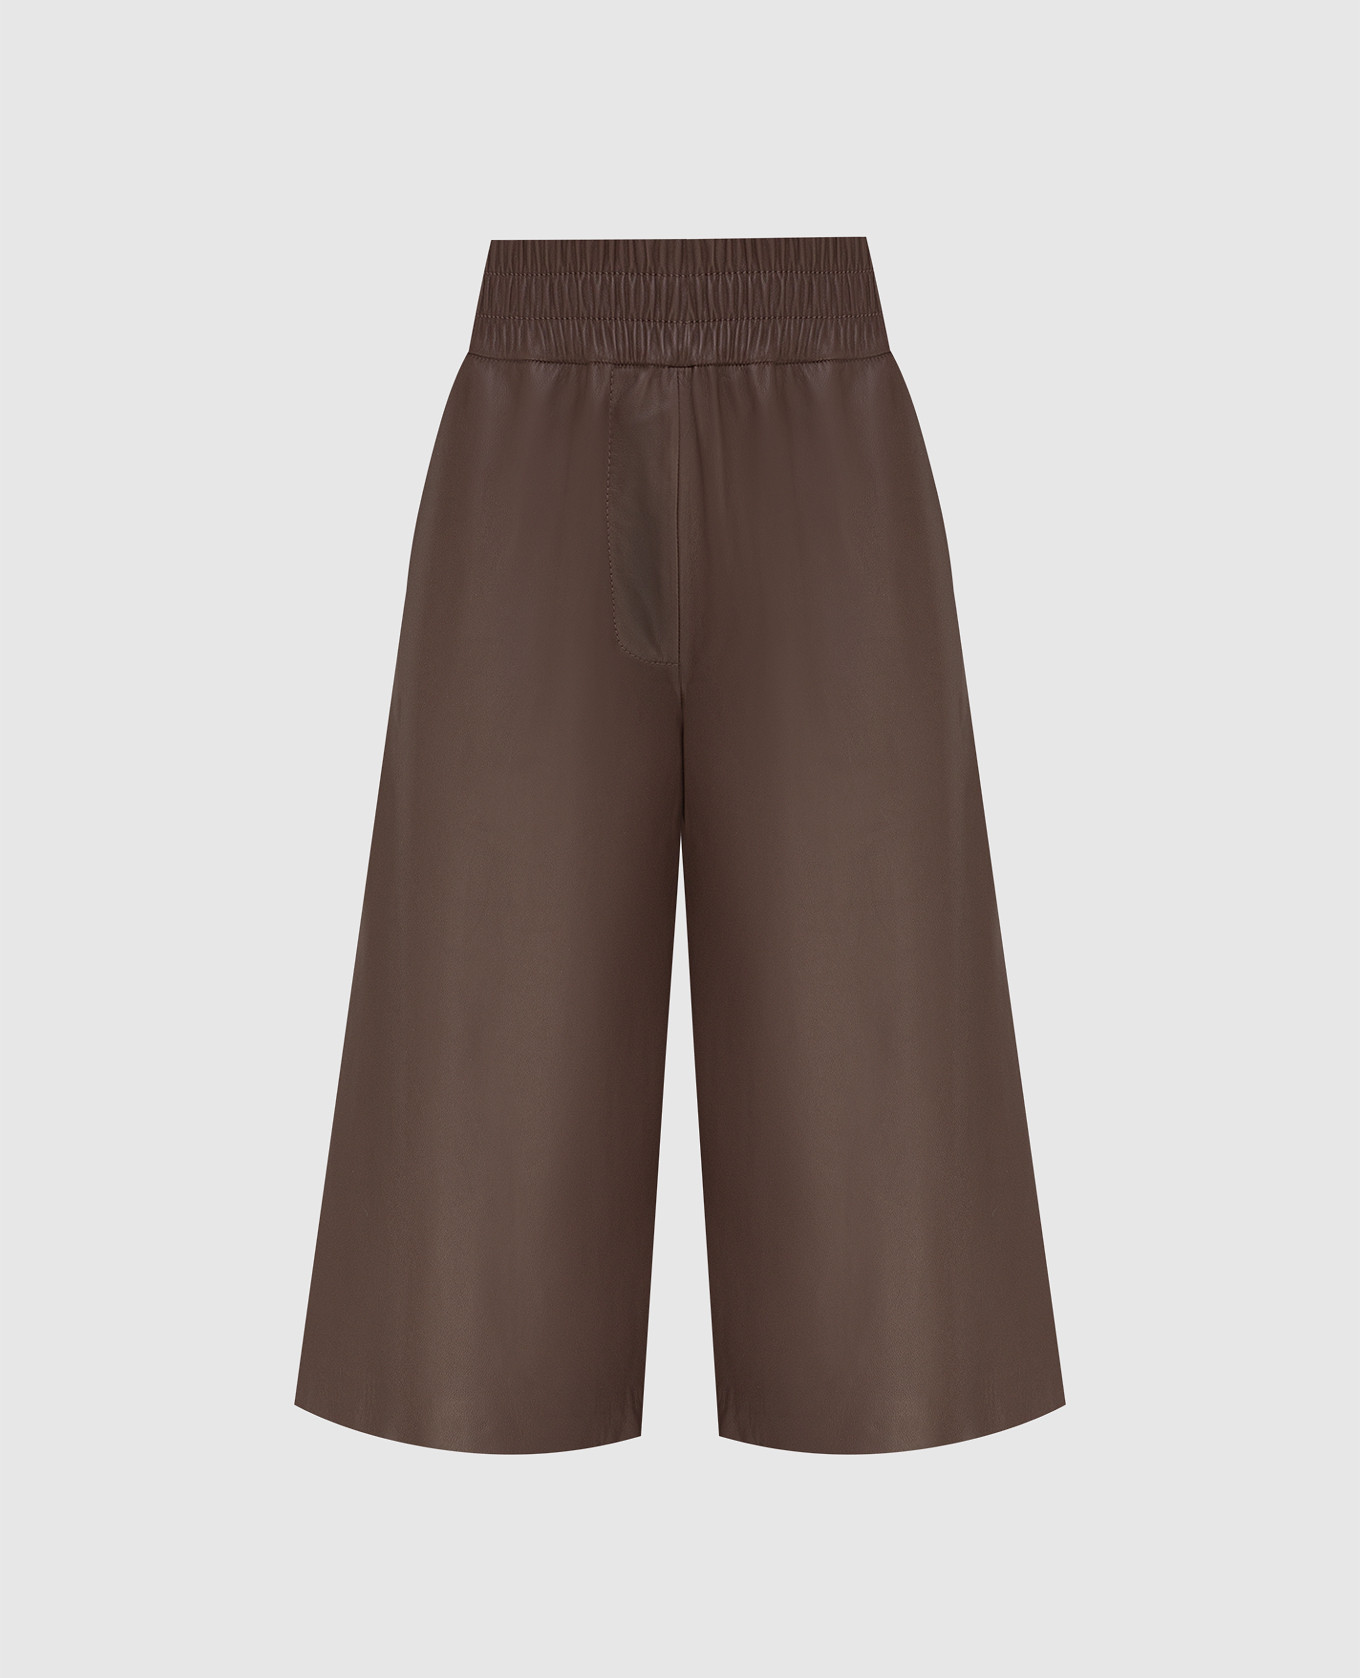 Brown leather bermuda shorts